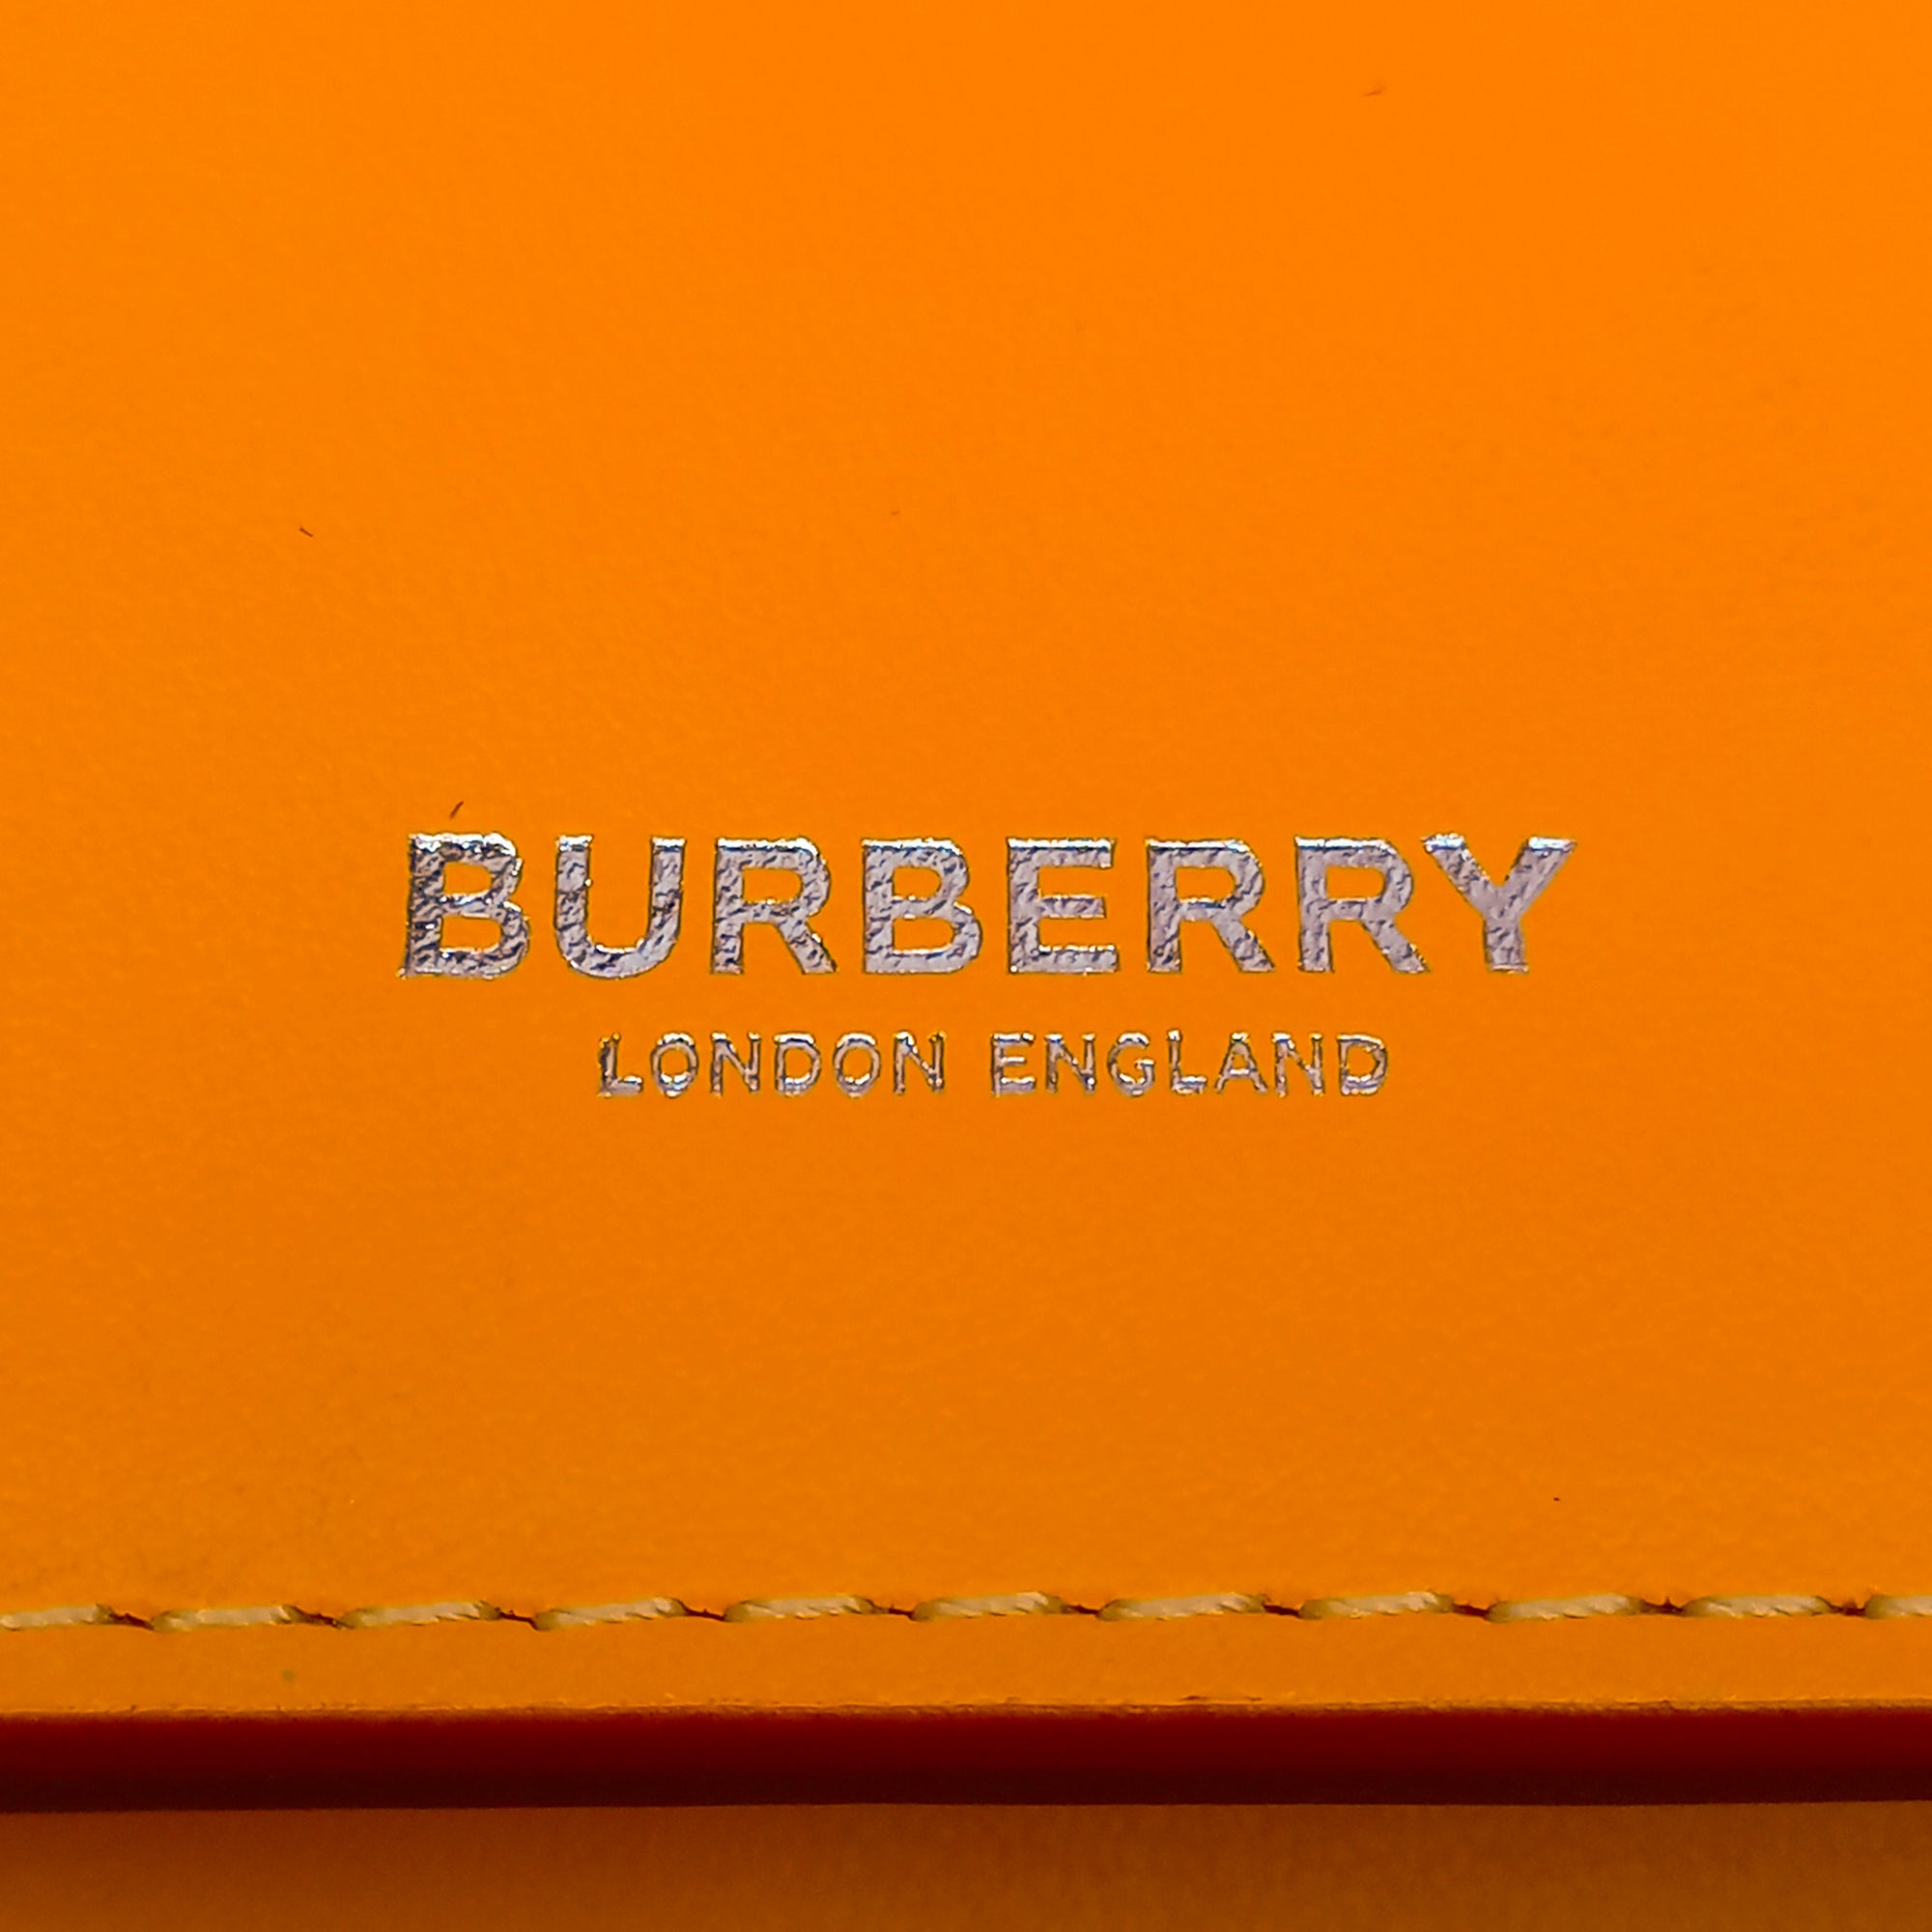 Burberry Handbags. in Orange